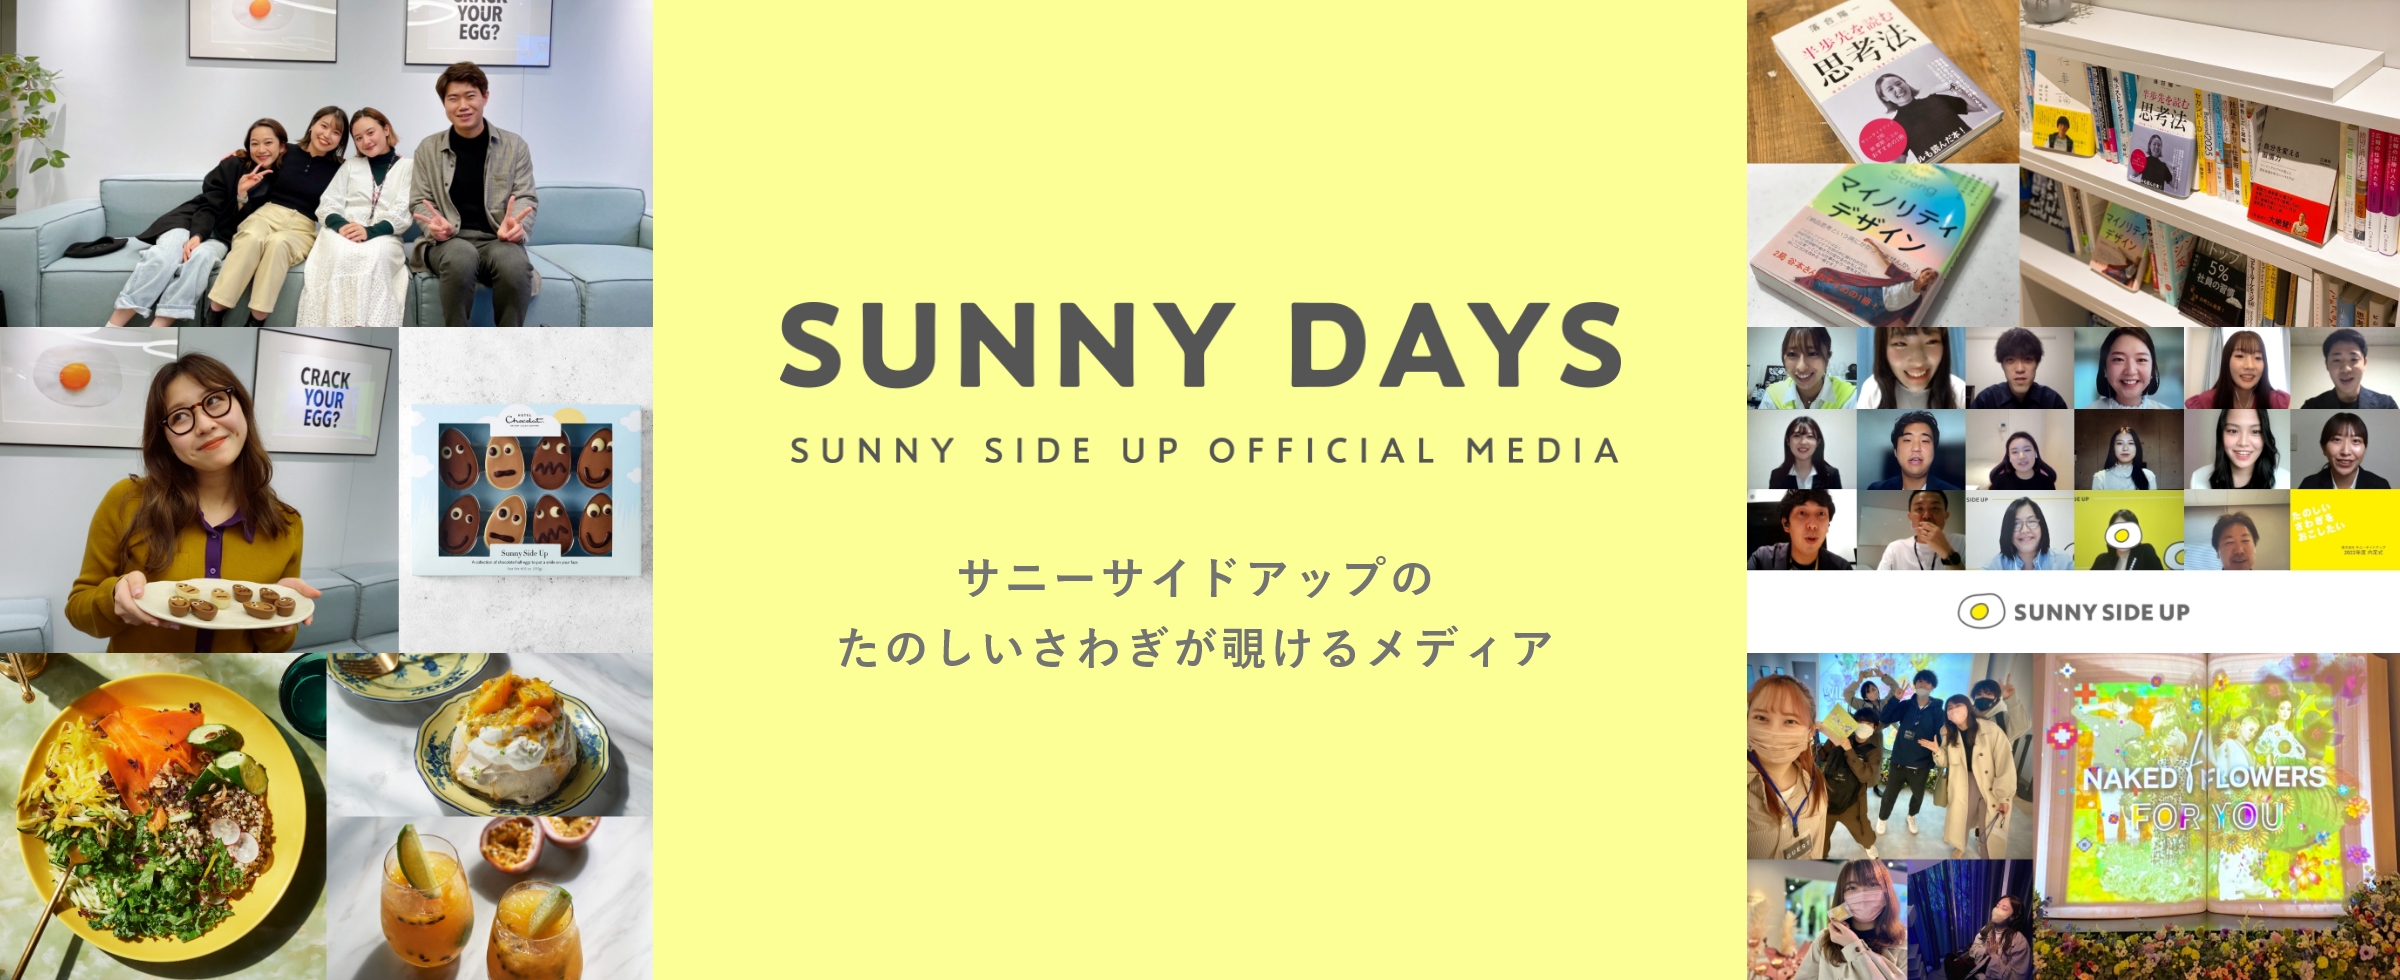 SUNNY DAYS